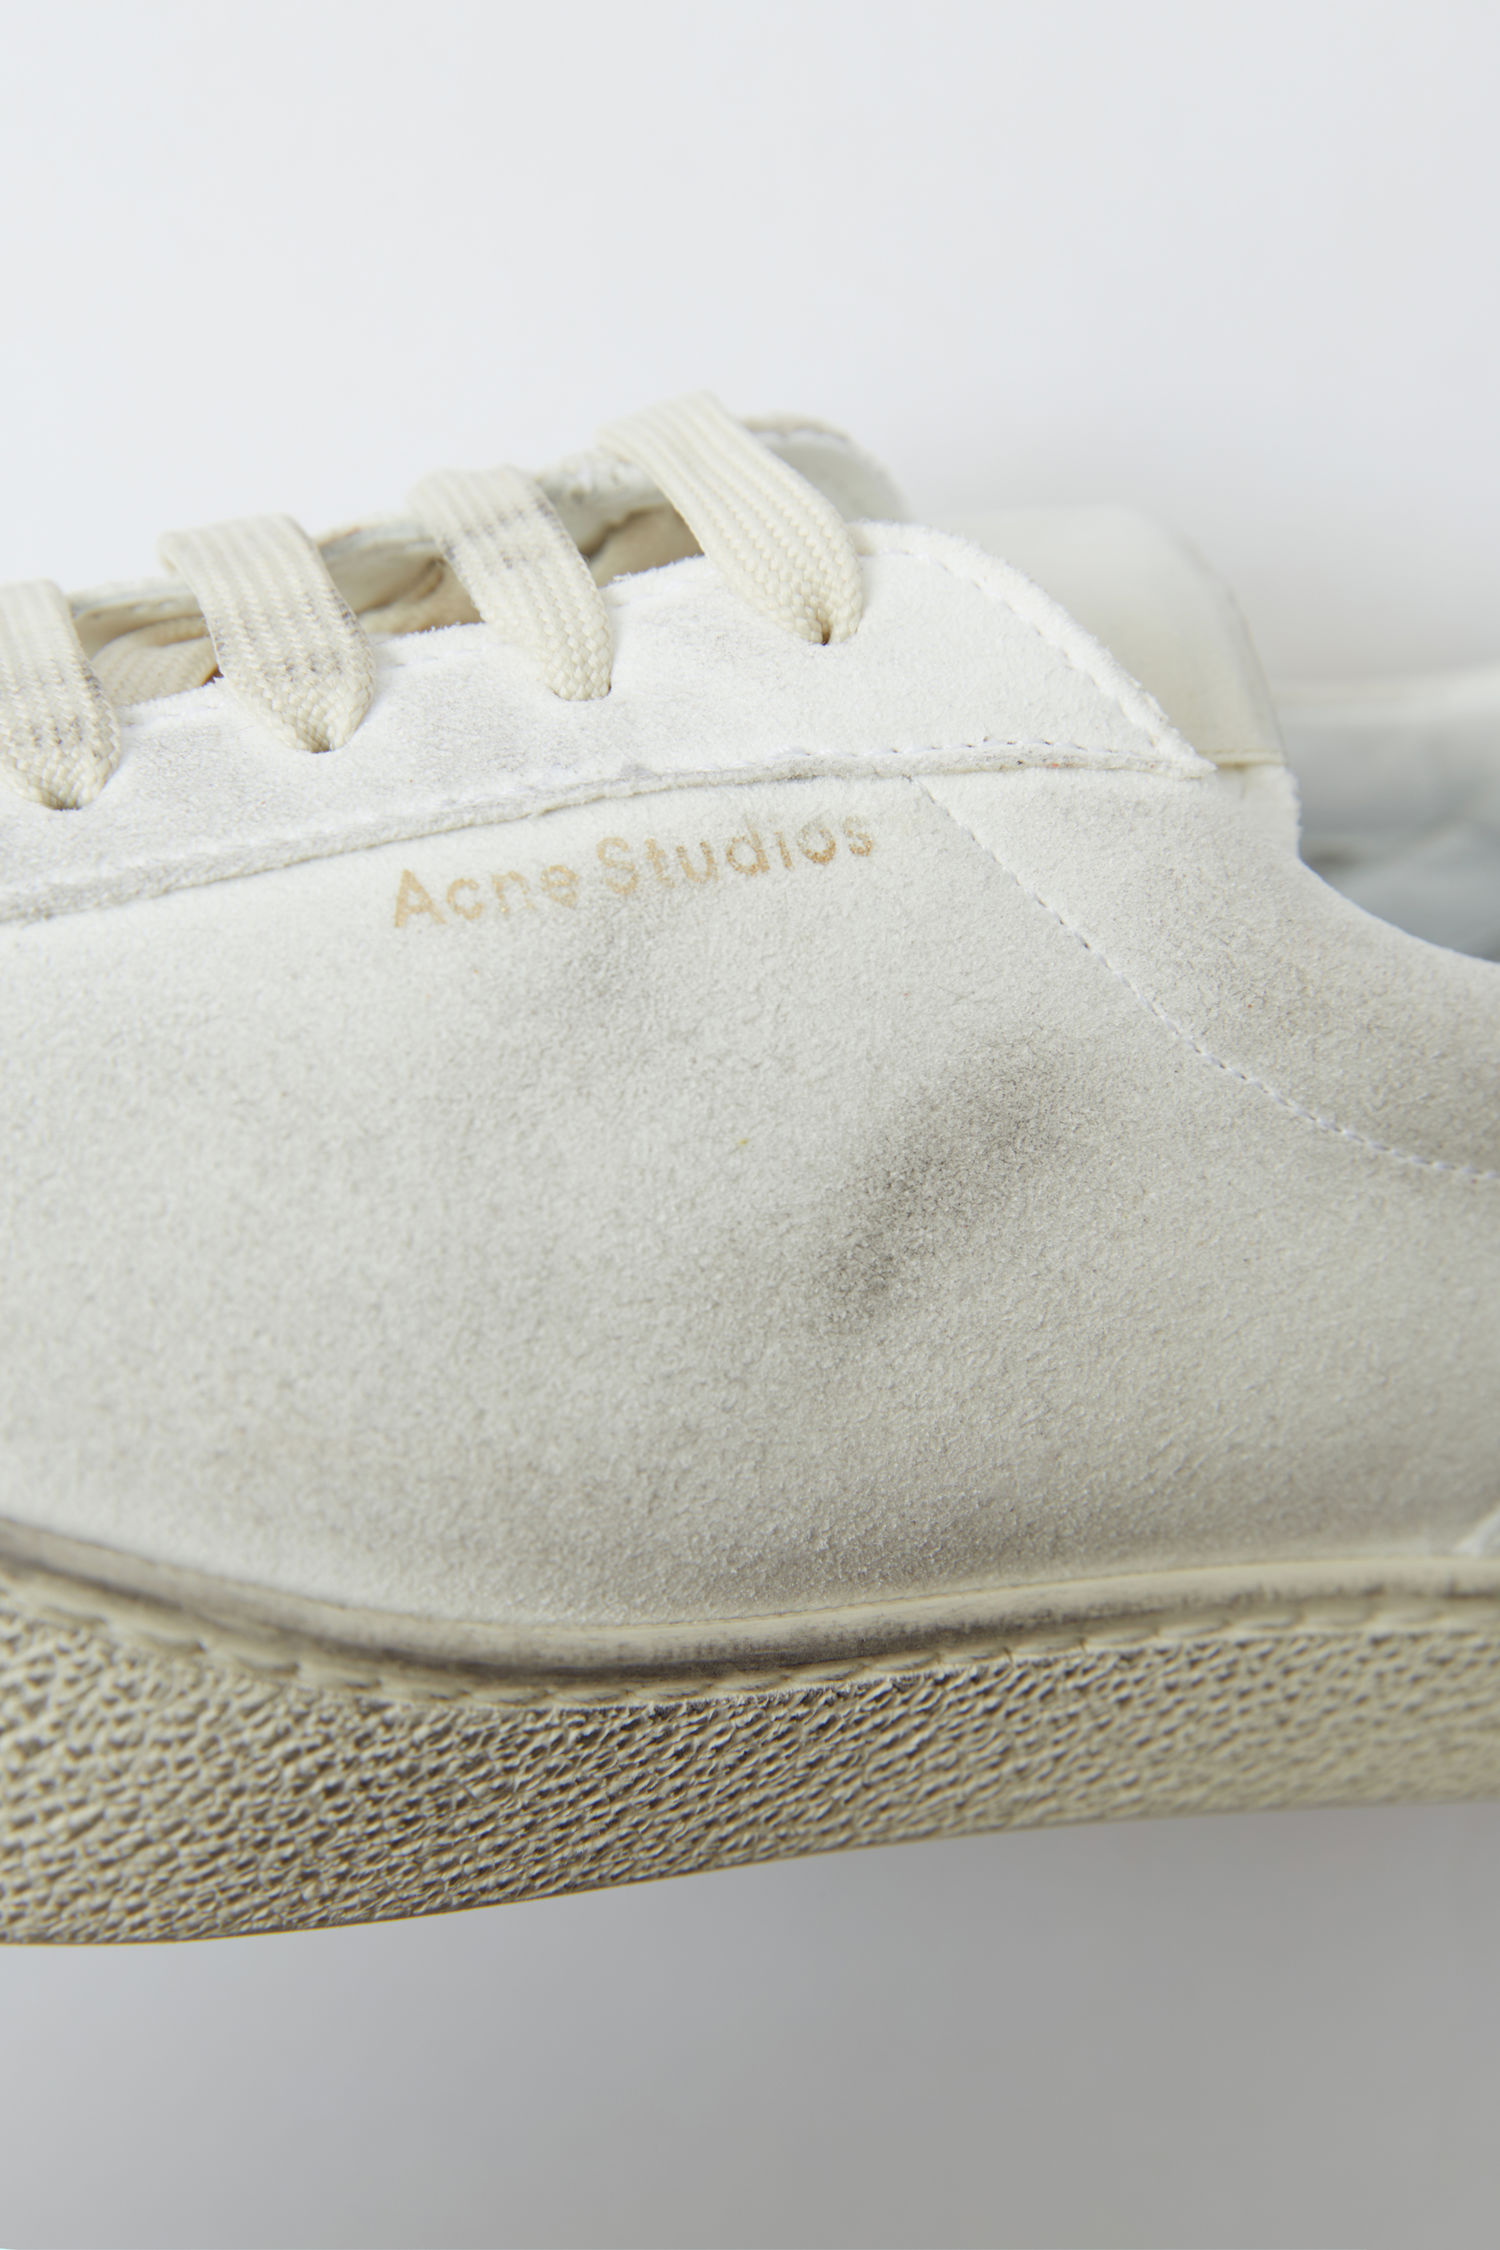 acne studios lars tumbled white